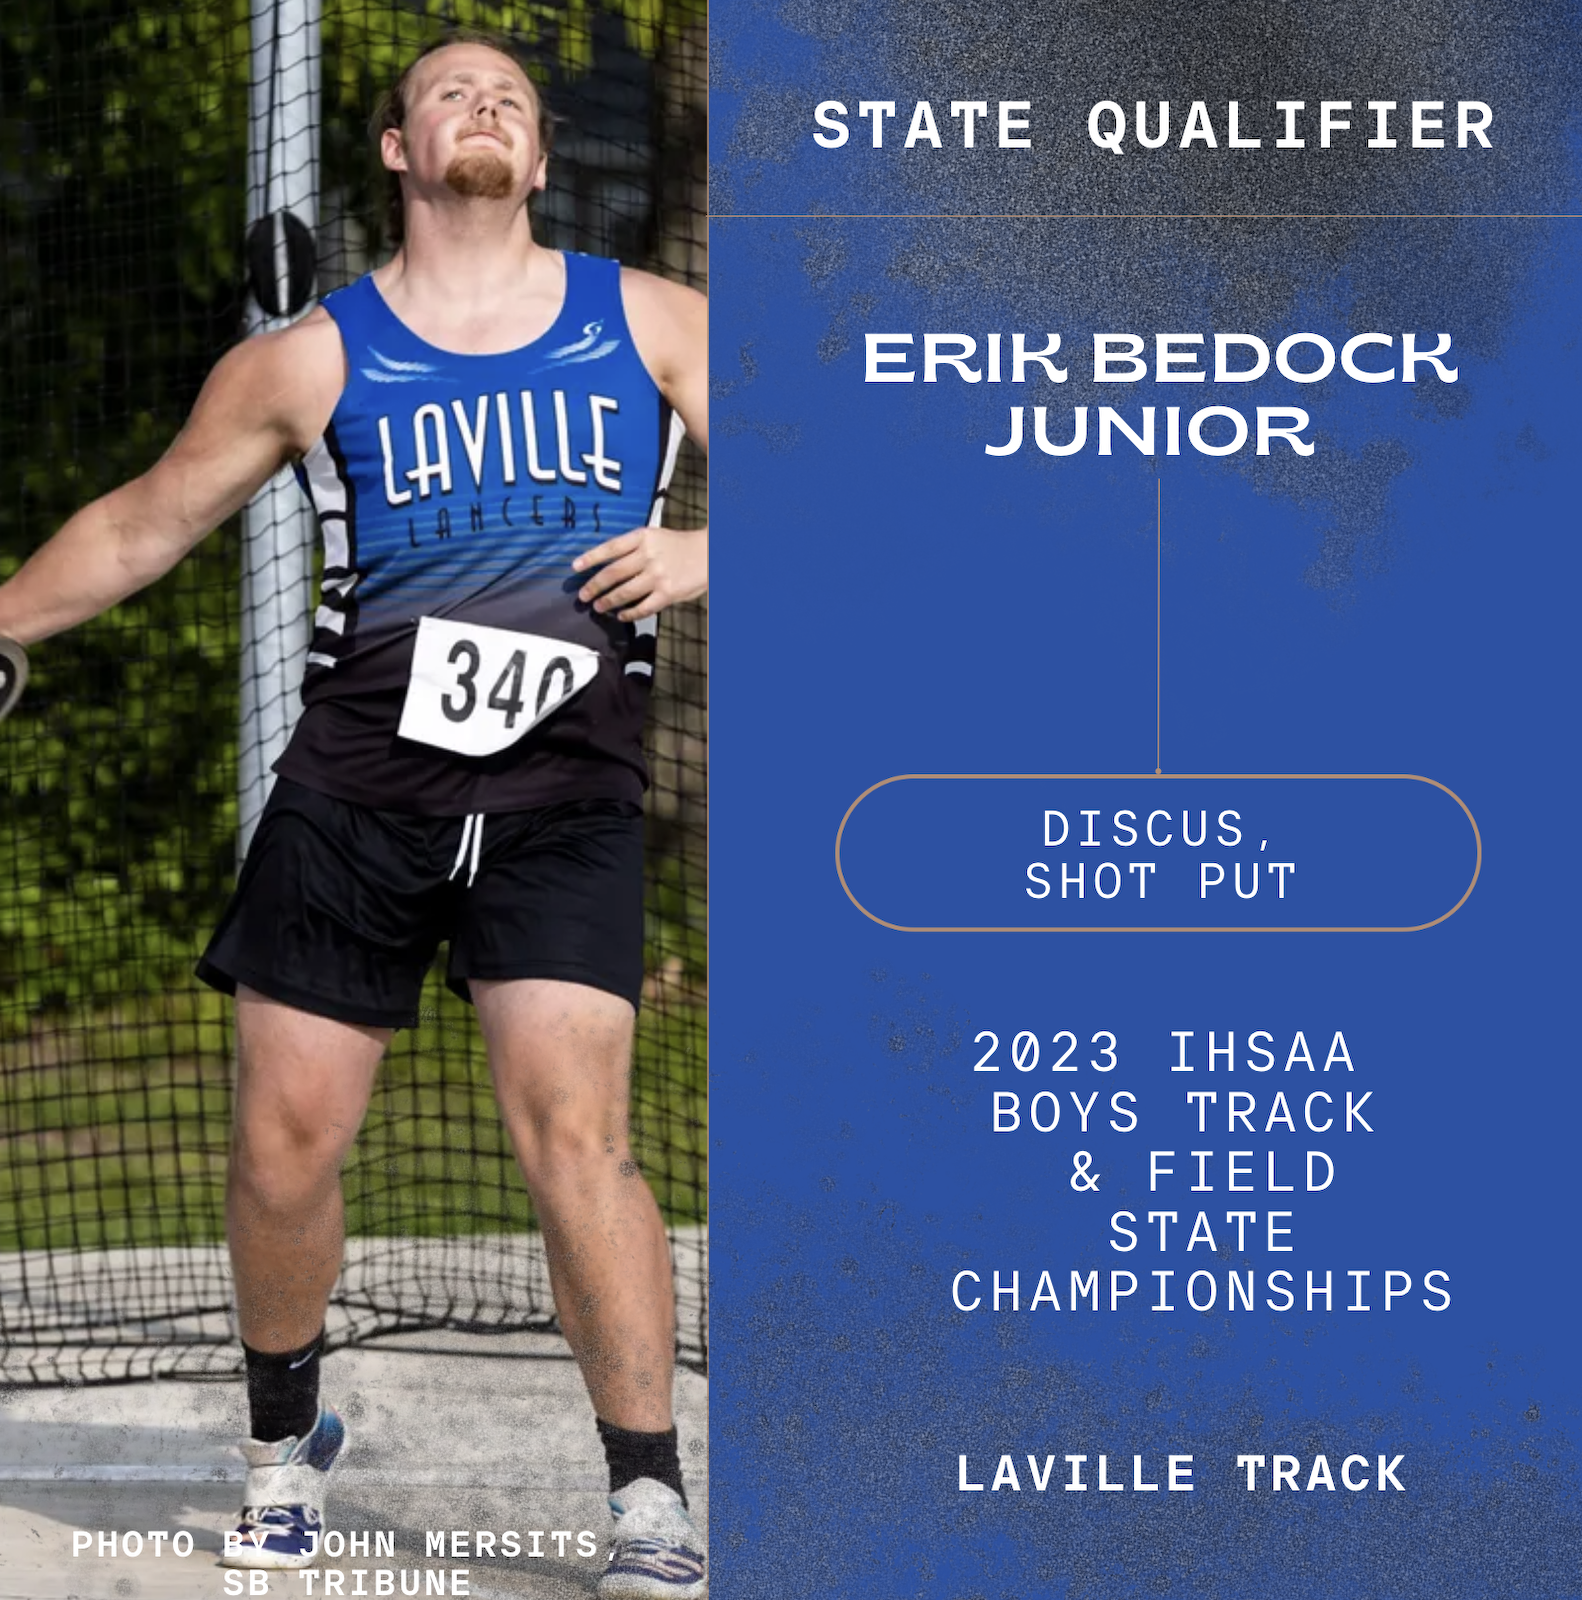 Trk - Erik Bedock Discus State Qualifier Graphic.png